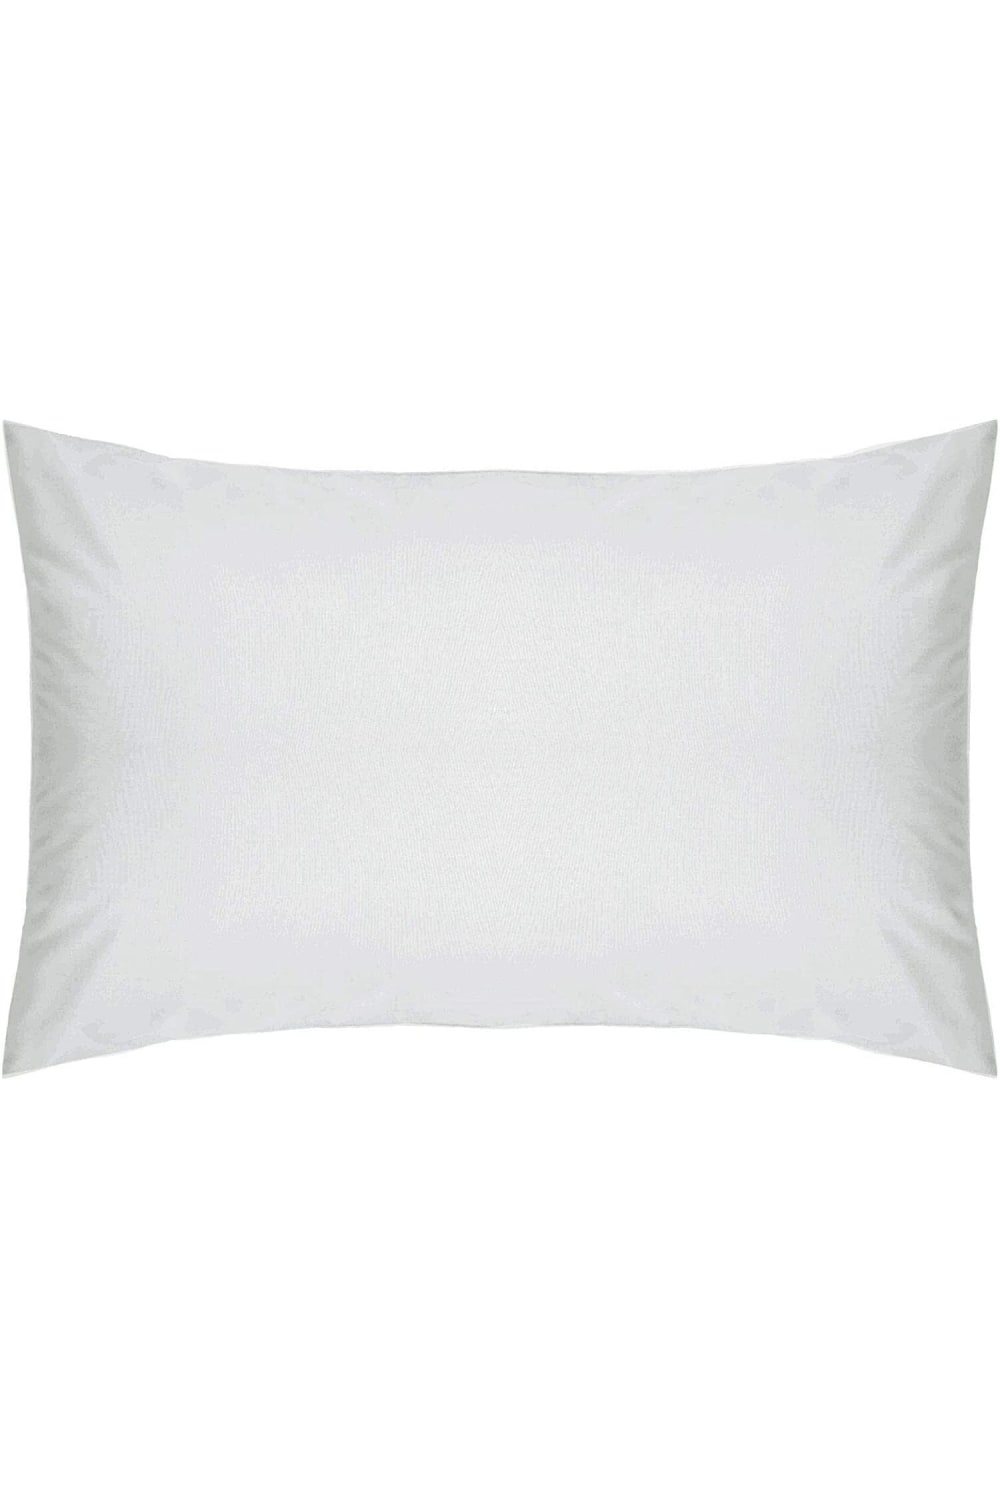 Belledorm Housewife Pillowcase (Pack of 2) (Cloud Grey) (51cm x 76cm)